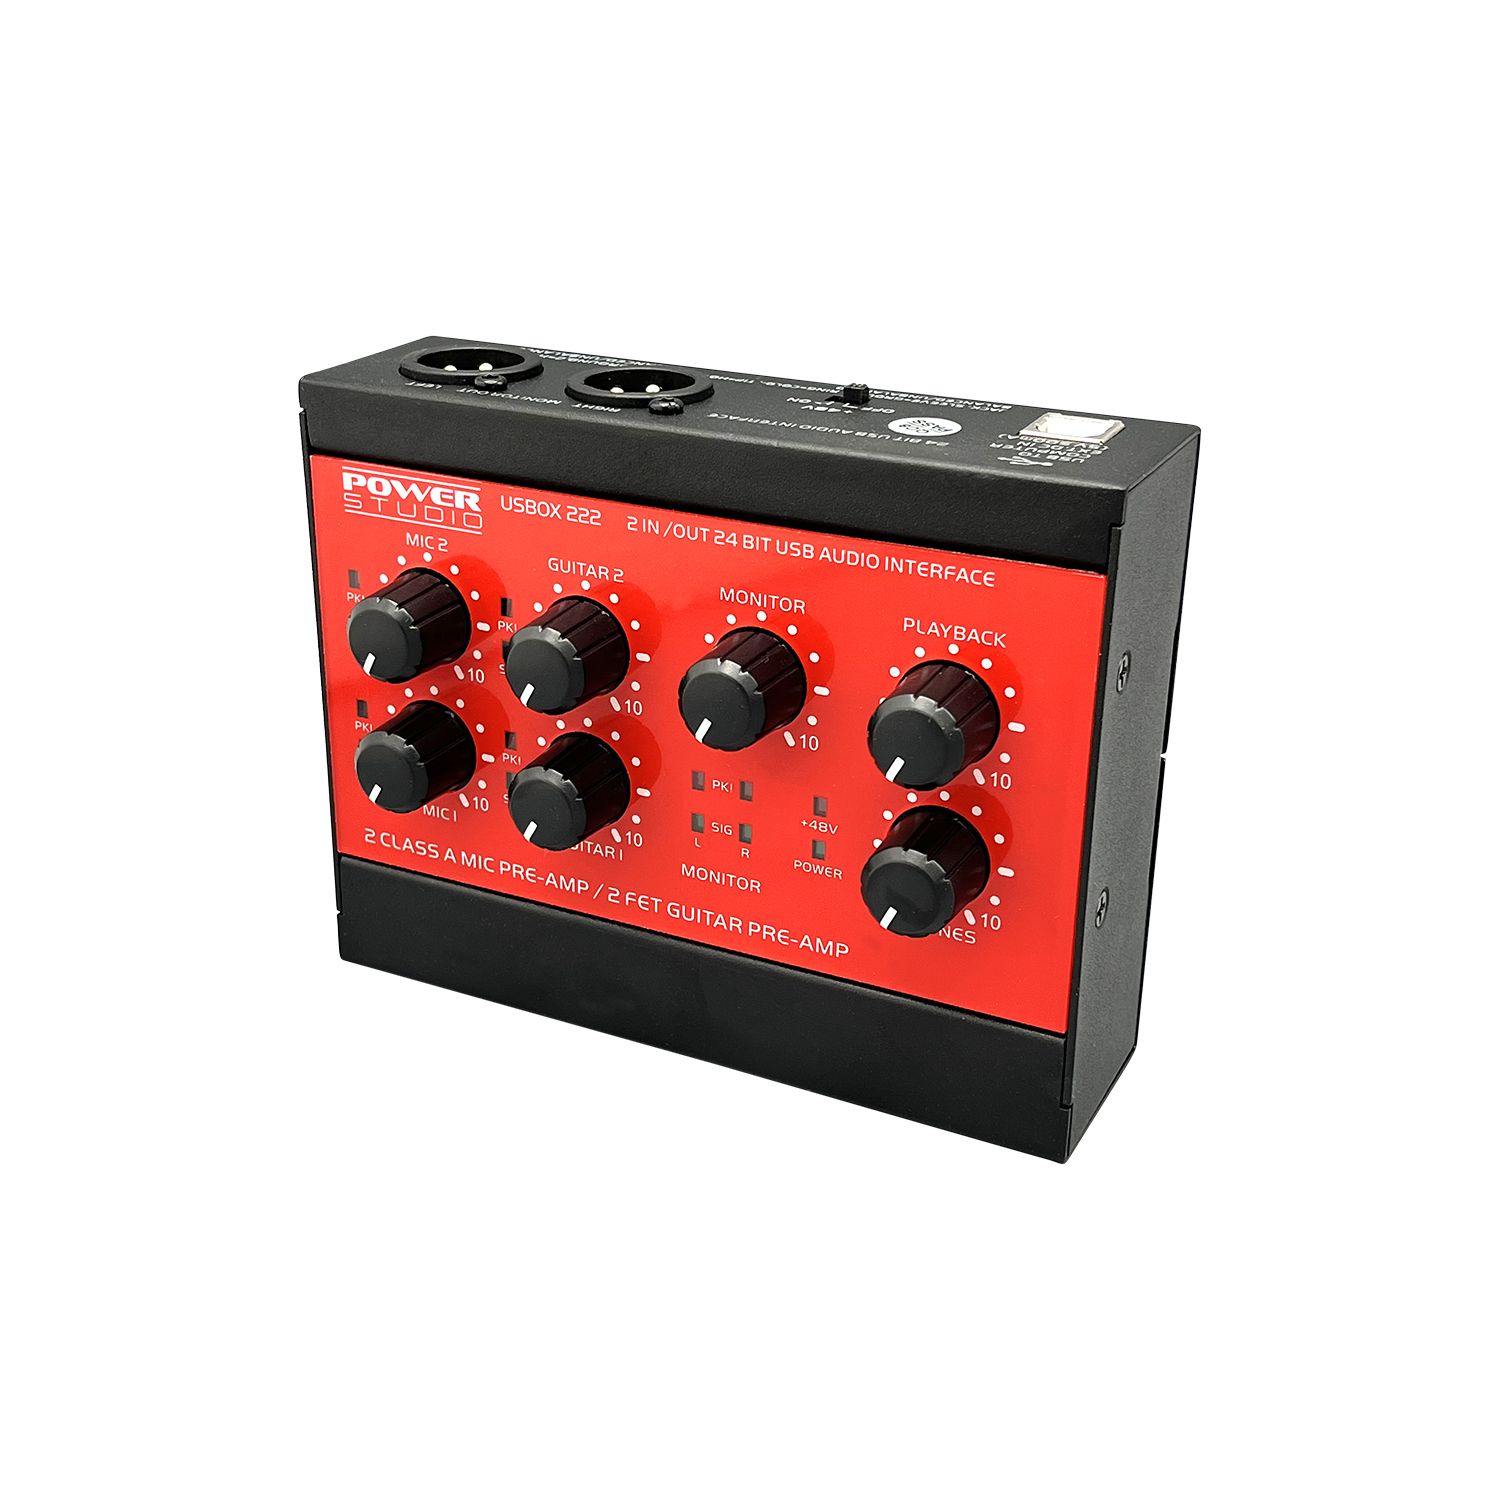 Power Studio Usbox 222 - Interface de audio USB - Variation 2